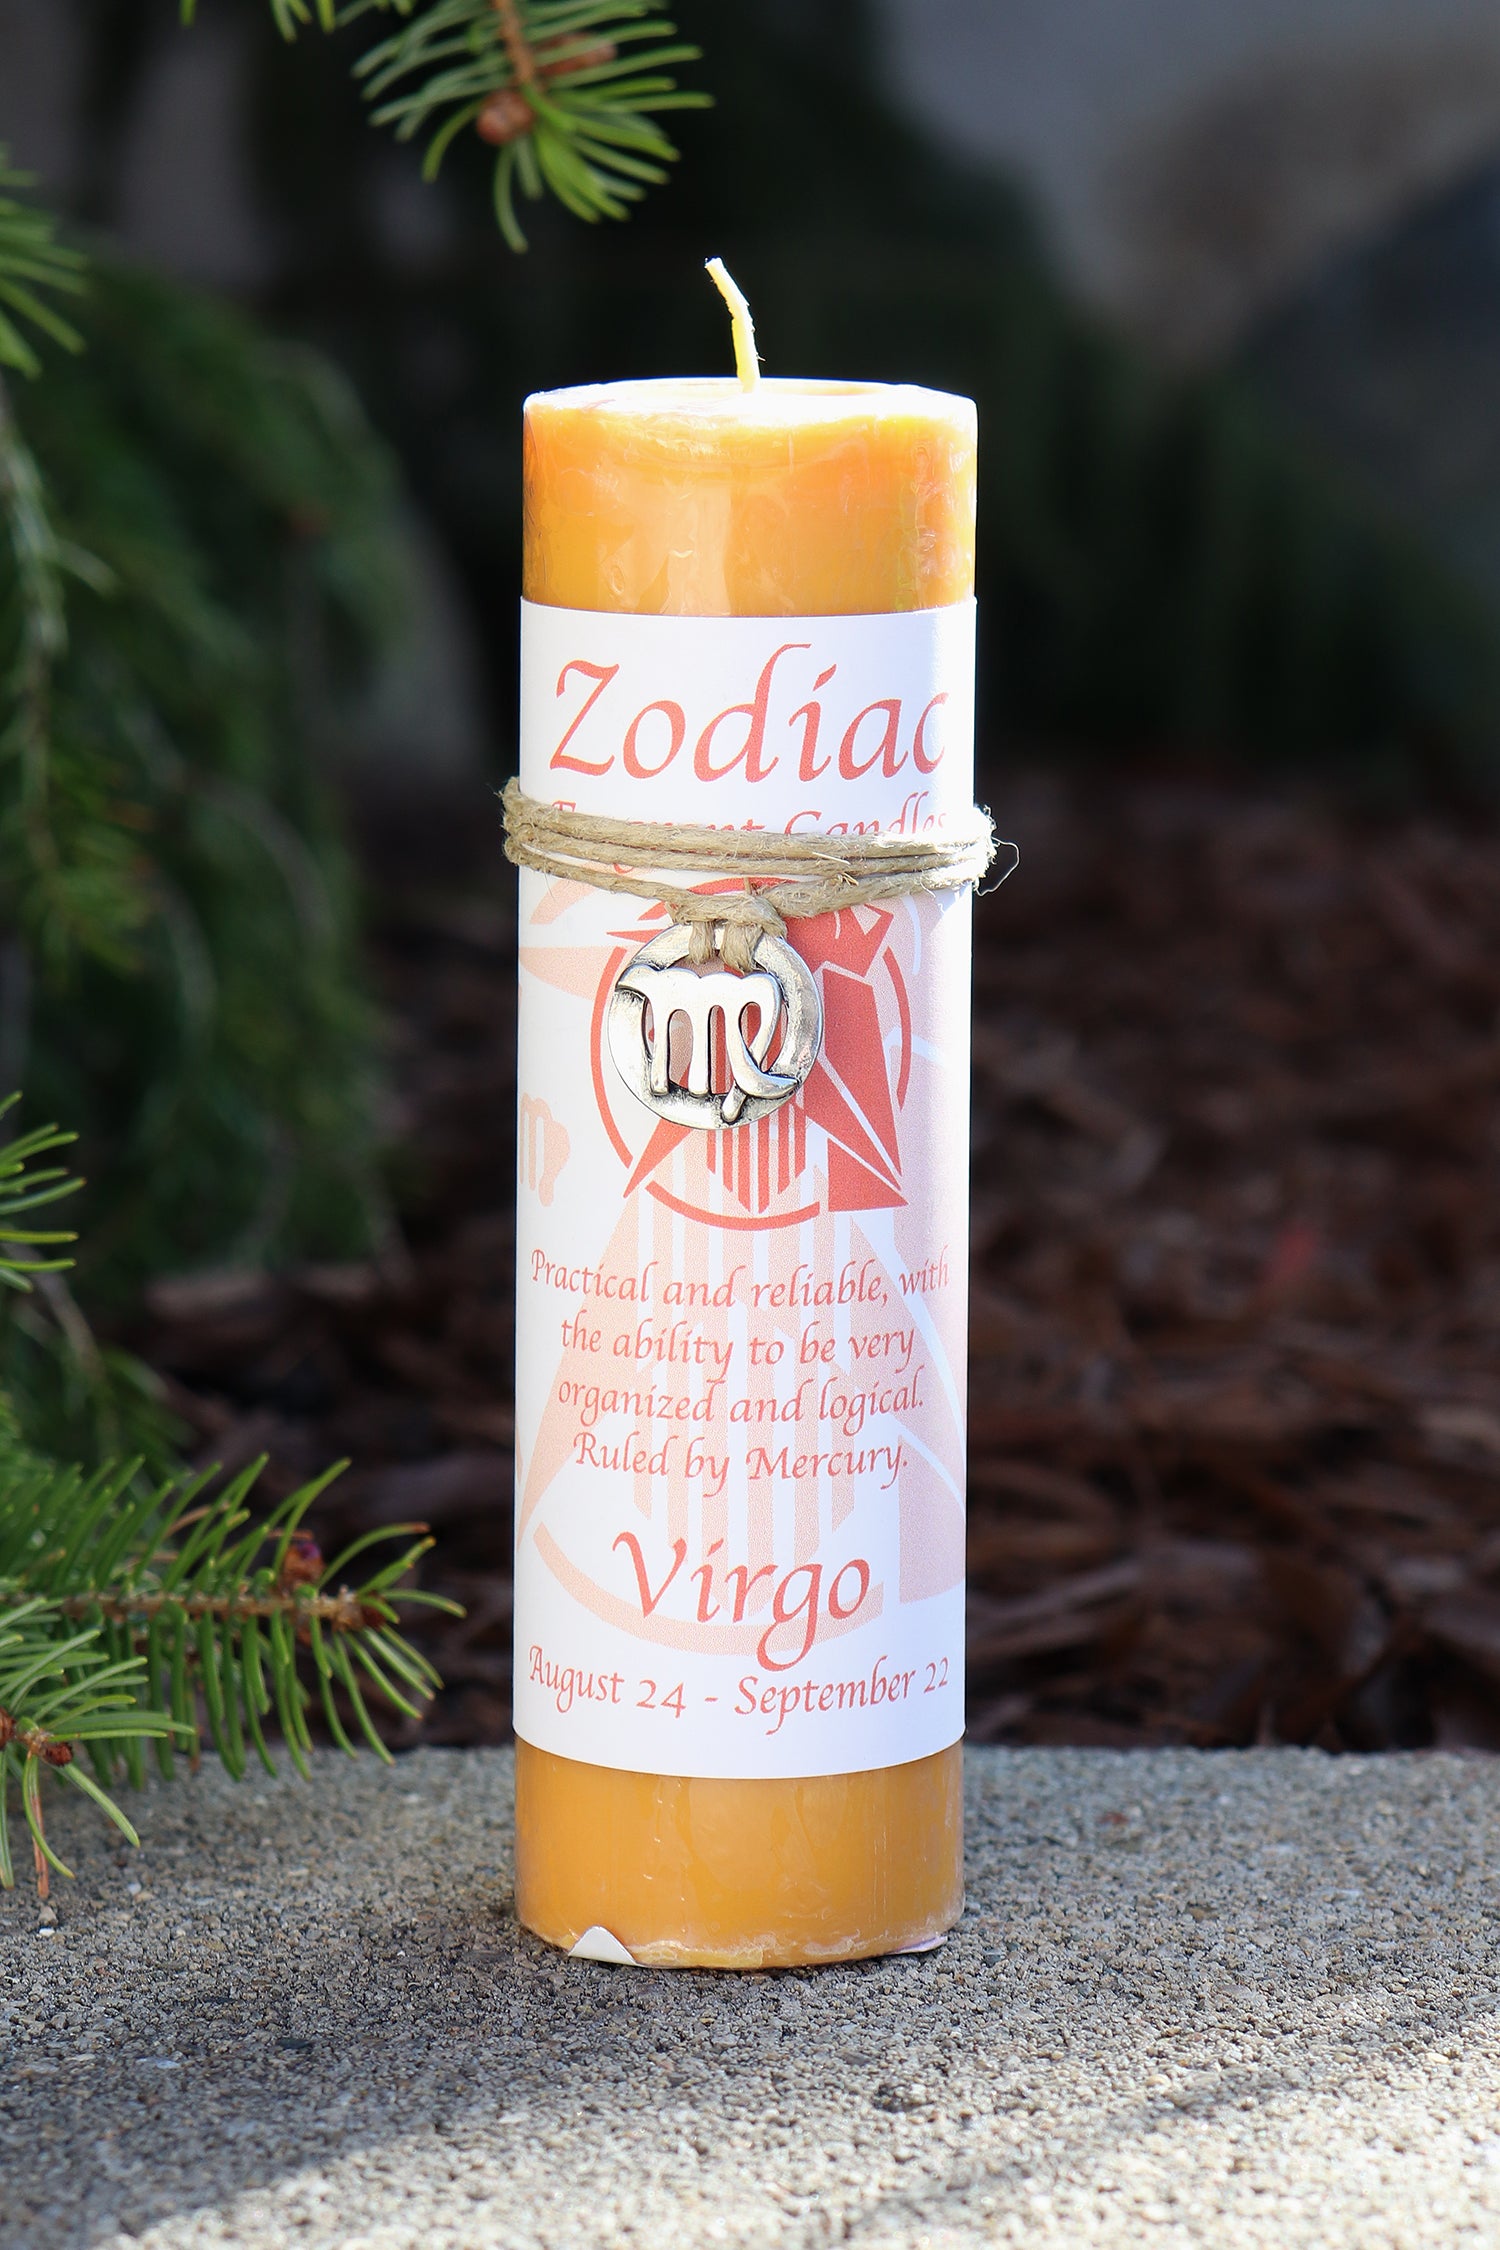 Virgo Zodiac Pendant Candle